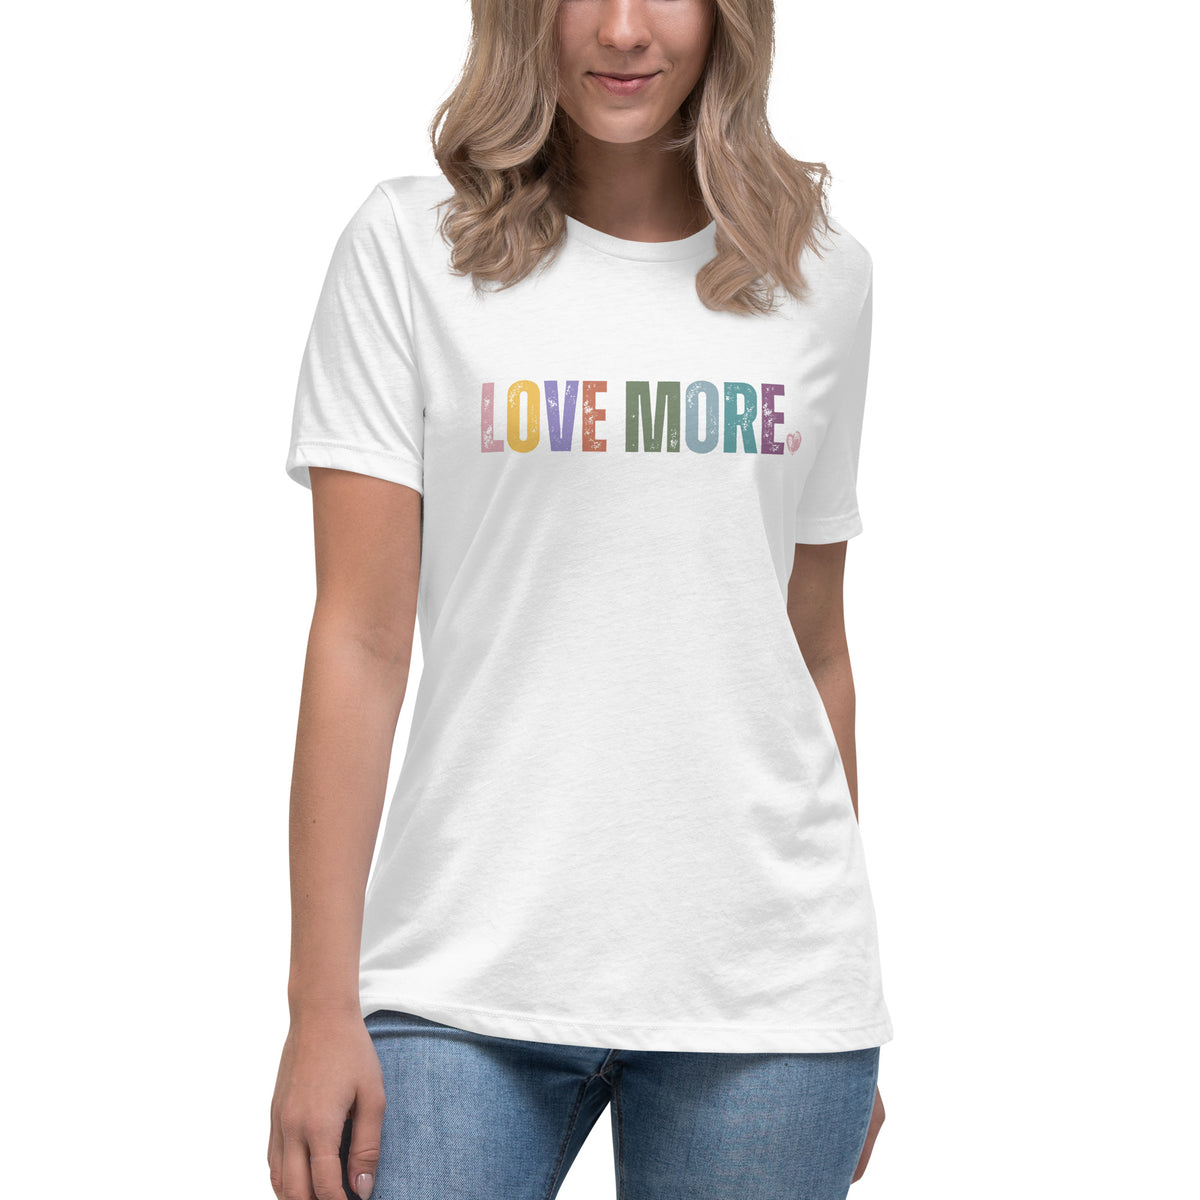 LOVE MORE Women's Relaxed T-Shirt